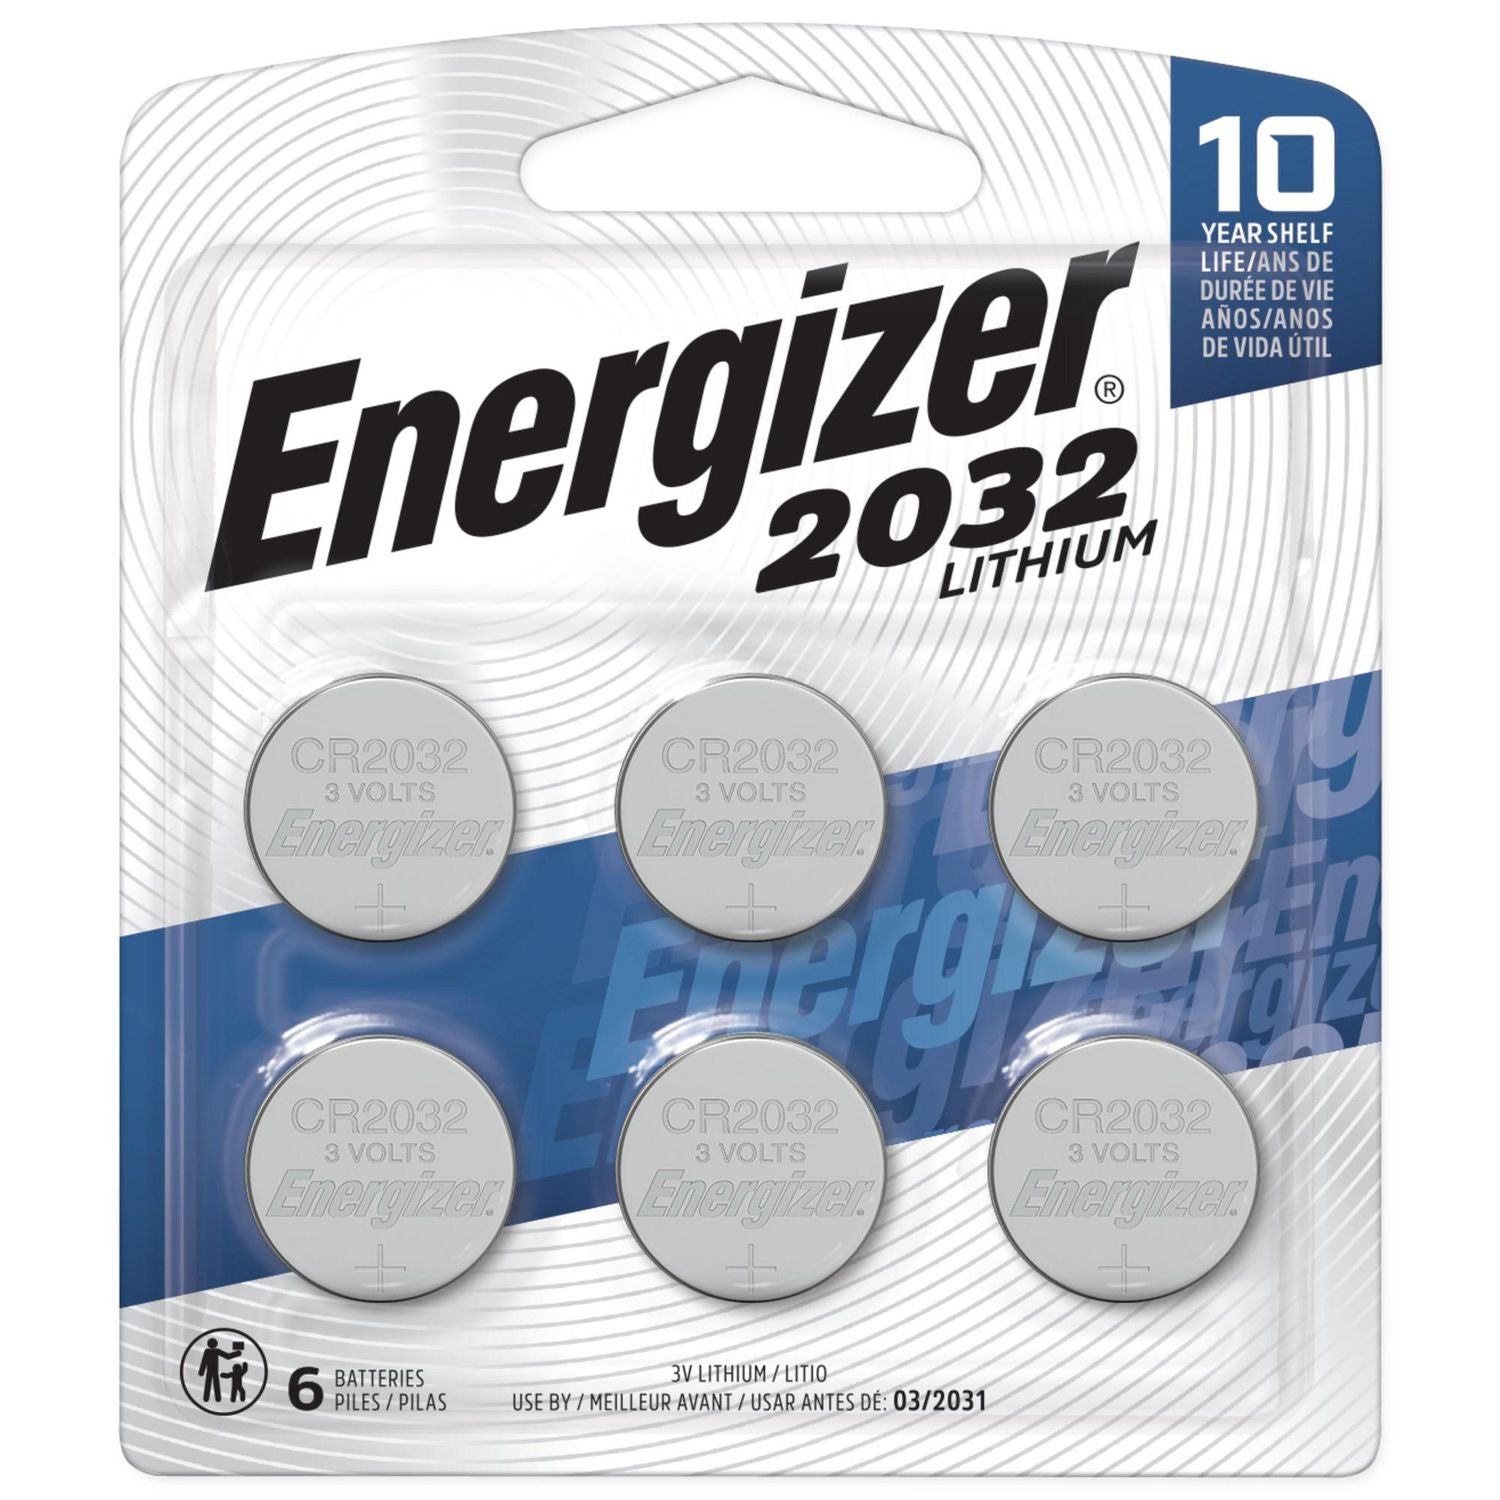 Energizer Lithium 2032 6Pk 3V Battery